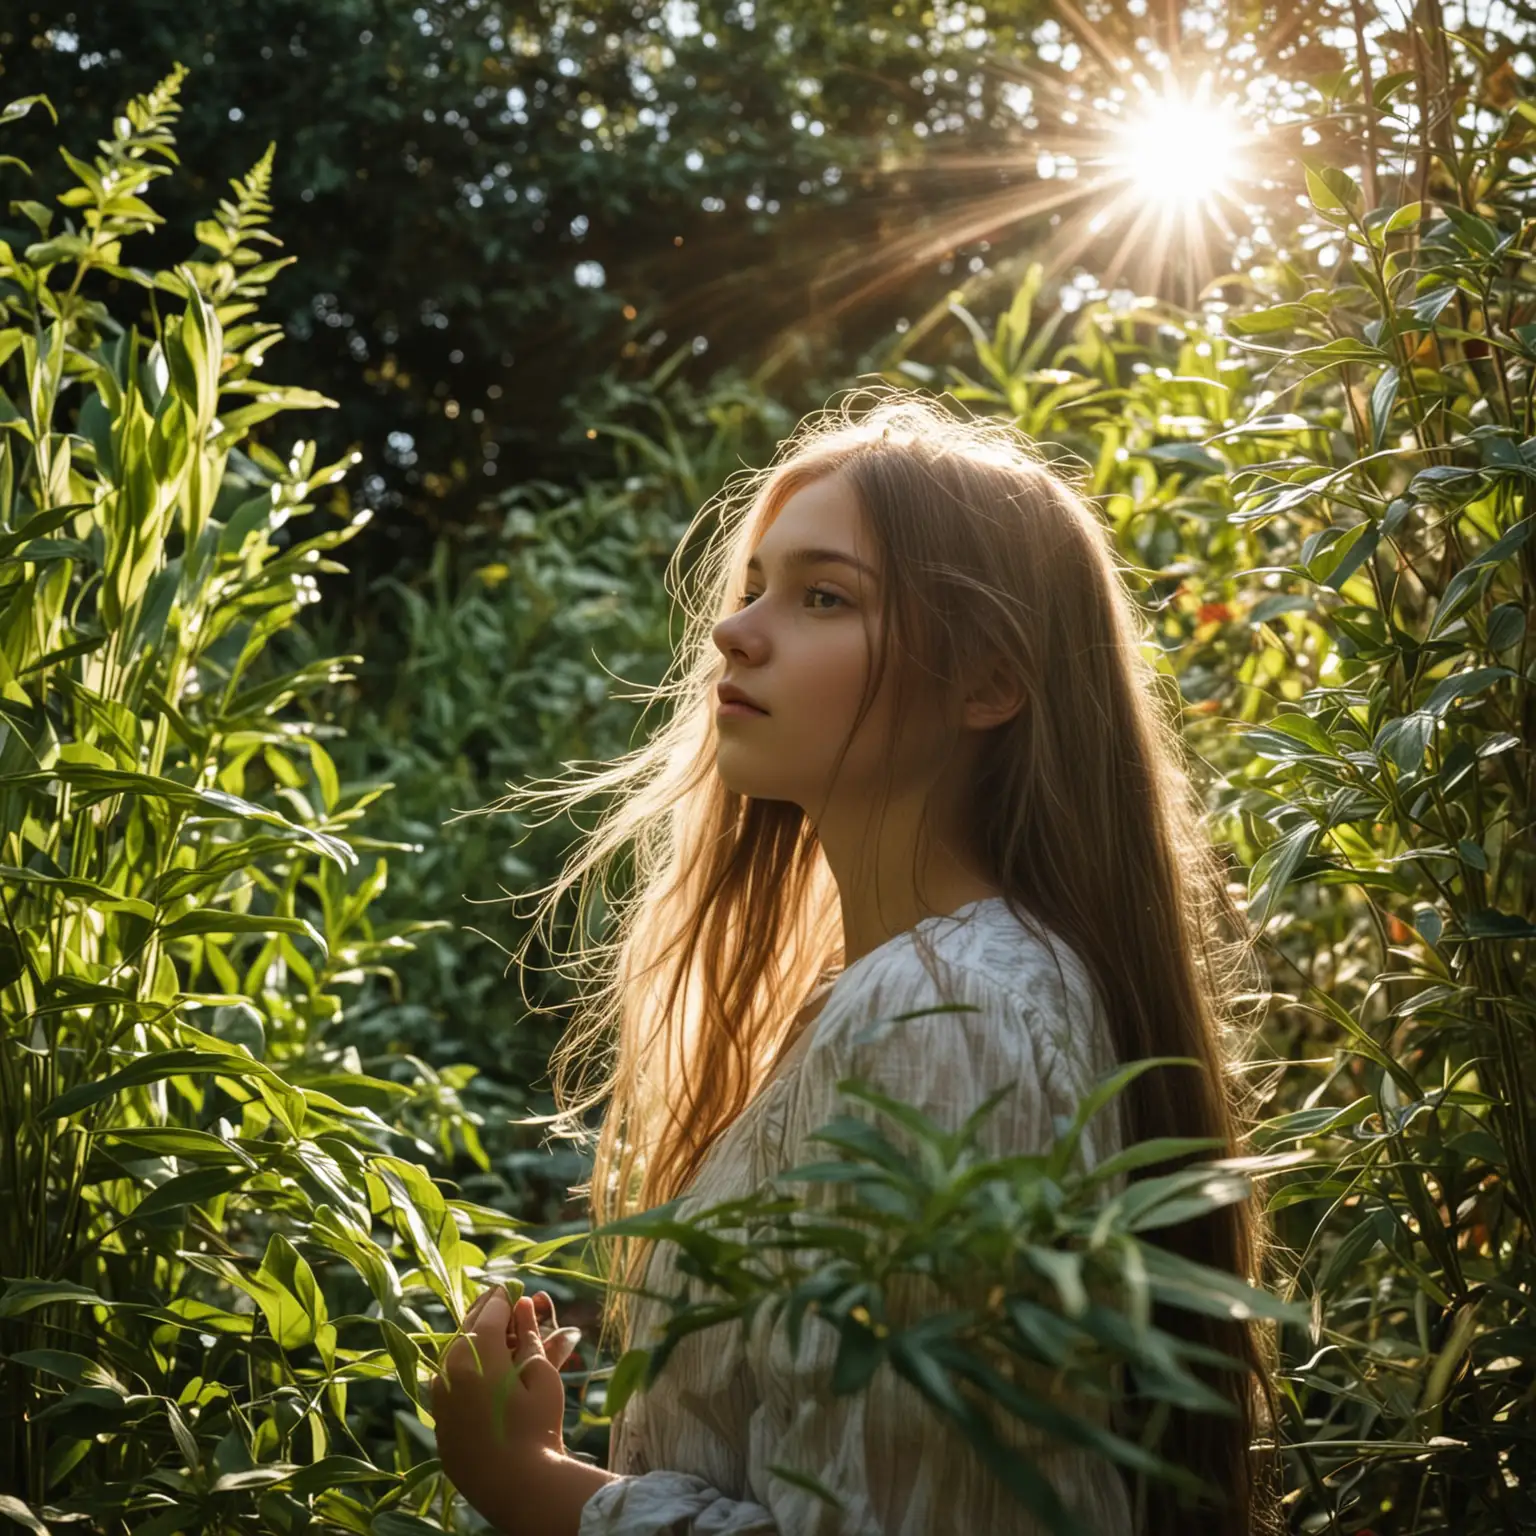 Girl Standing in Sunlit Garden Amidst Lush Foliage